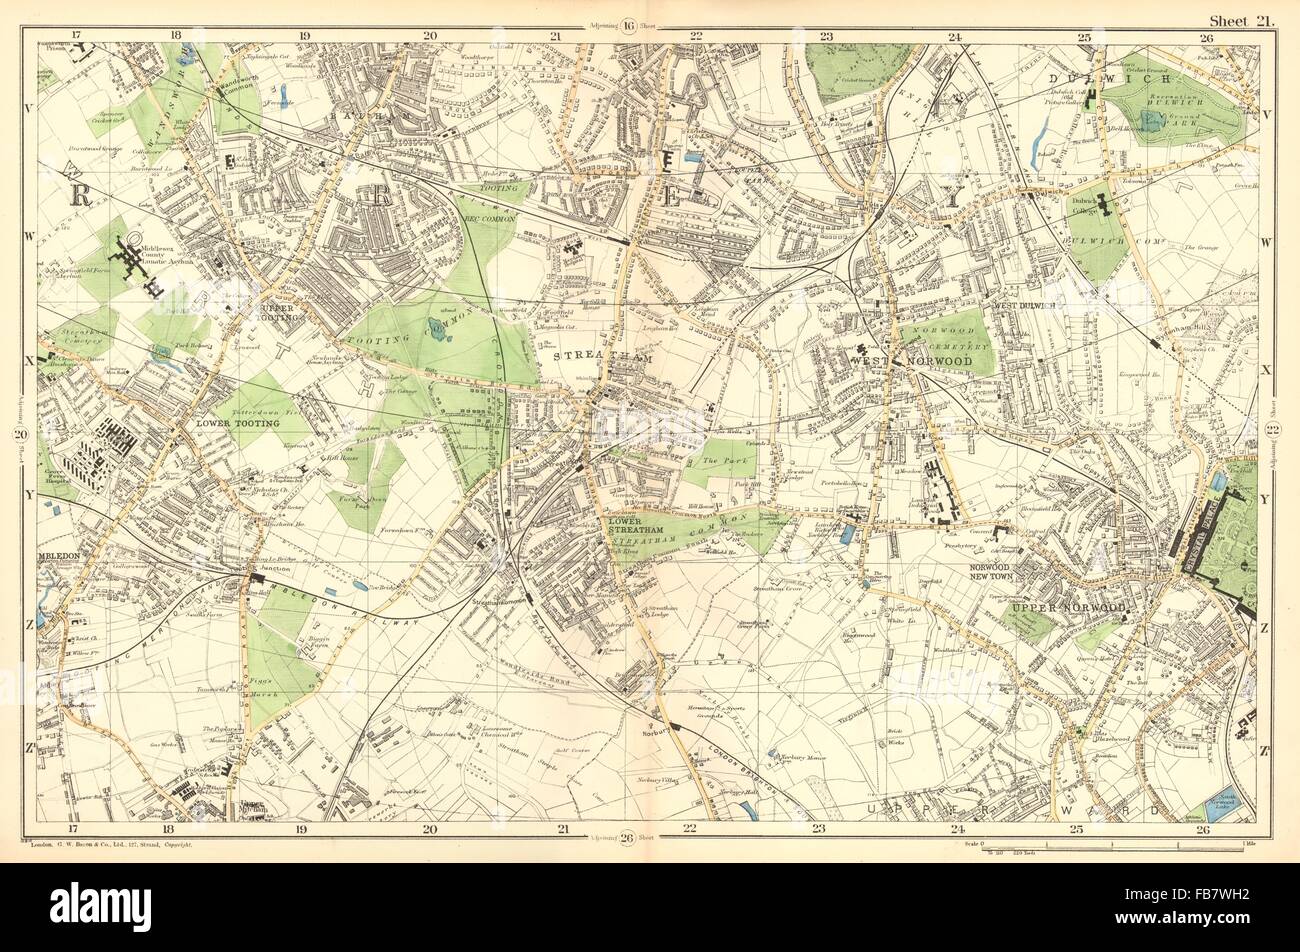 CLAPHAM Wandsworth,Balham,Upper Tooting,Battersea,Clapham Junction 1923 map 